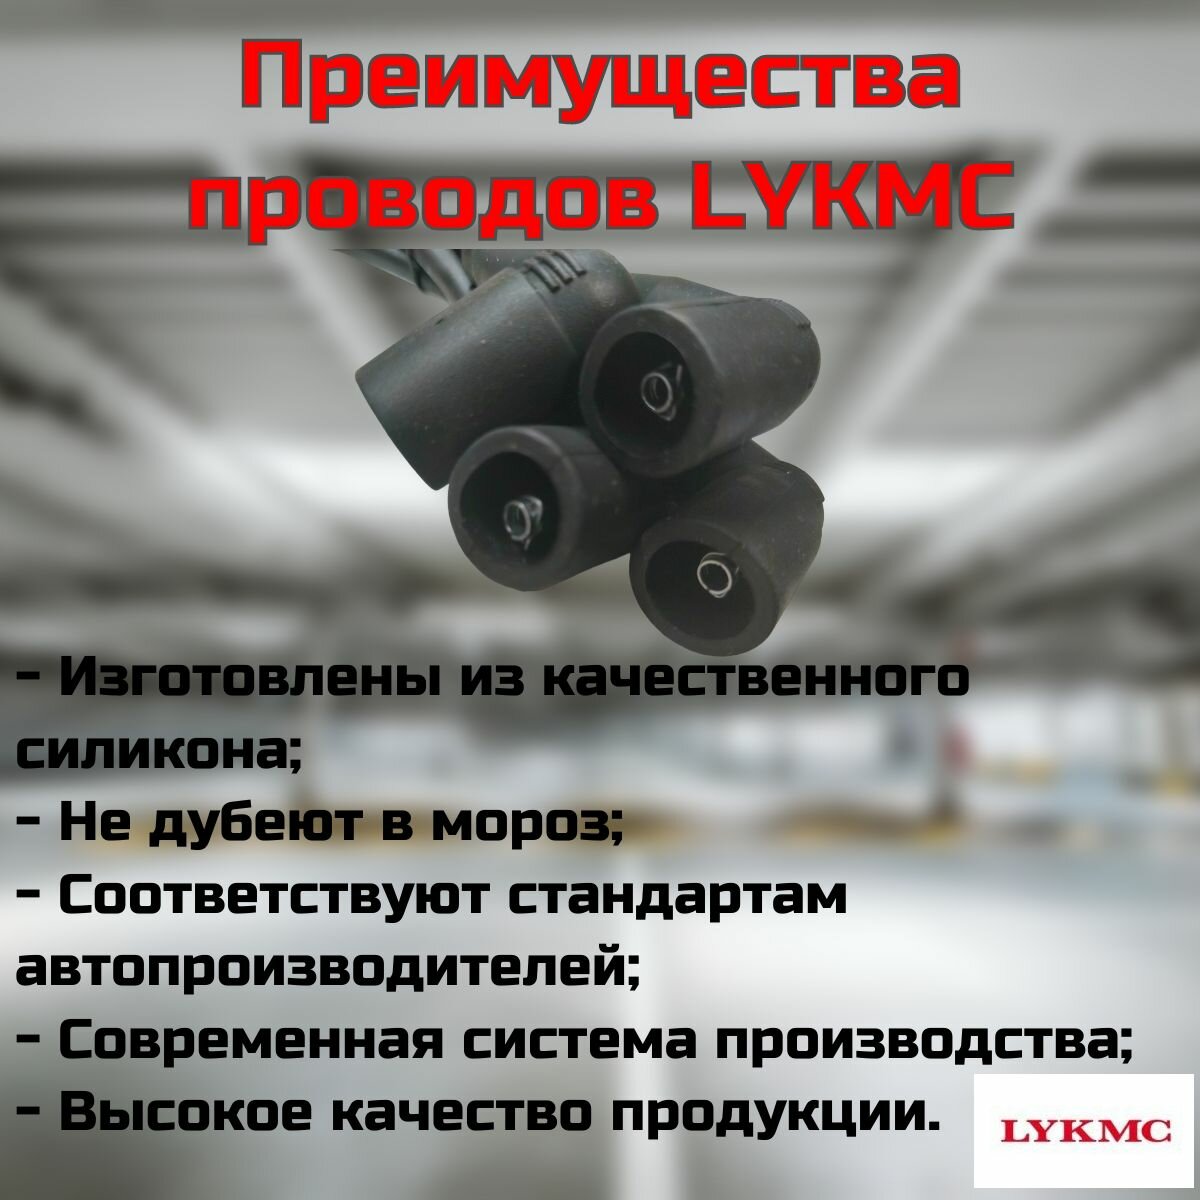 Провода высоковольтные LYKMC комплект для Lifan X50, Solano 1.6L, Breez, Smily